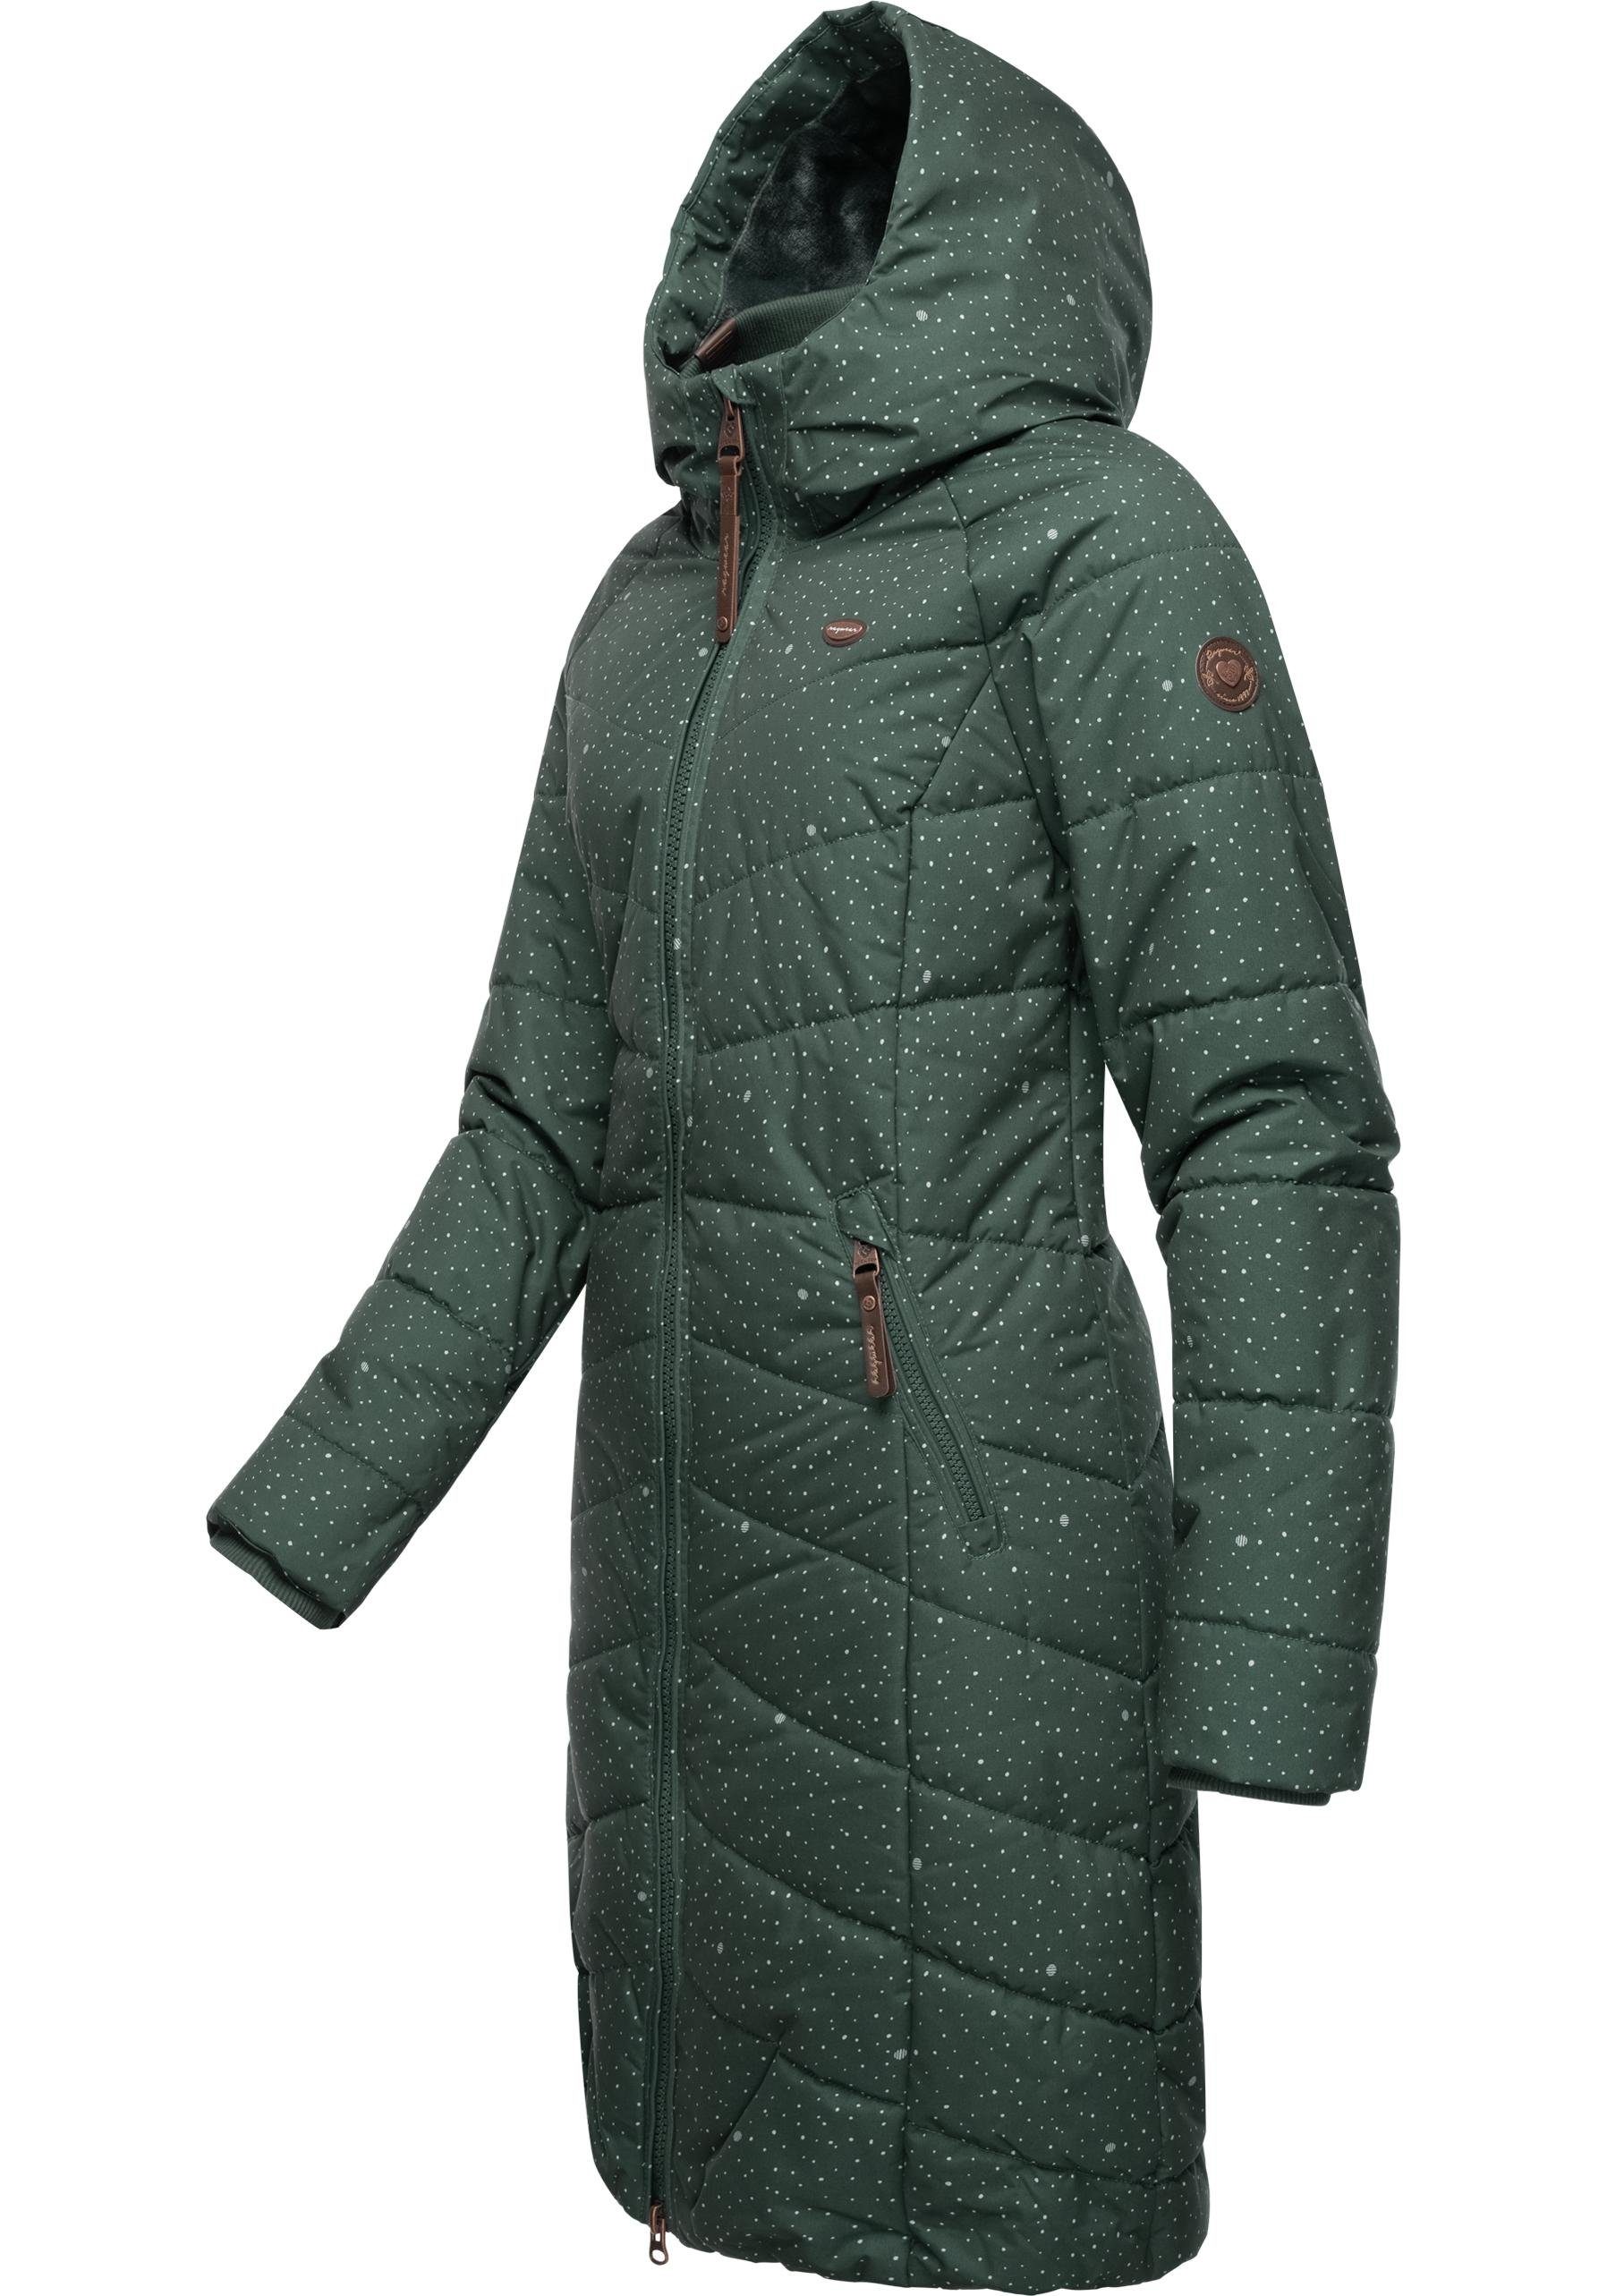 Dizzie Winterparka mit Ragwear Print Kapuze Coat stylischer, gesteppter Steppmantel dunkelgrün